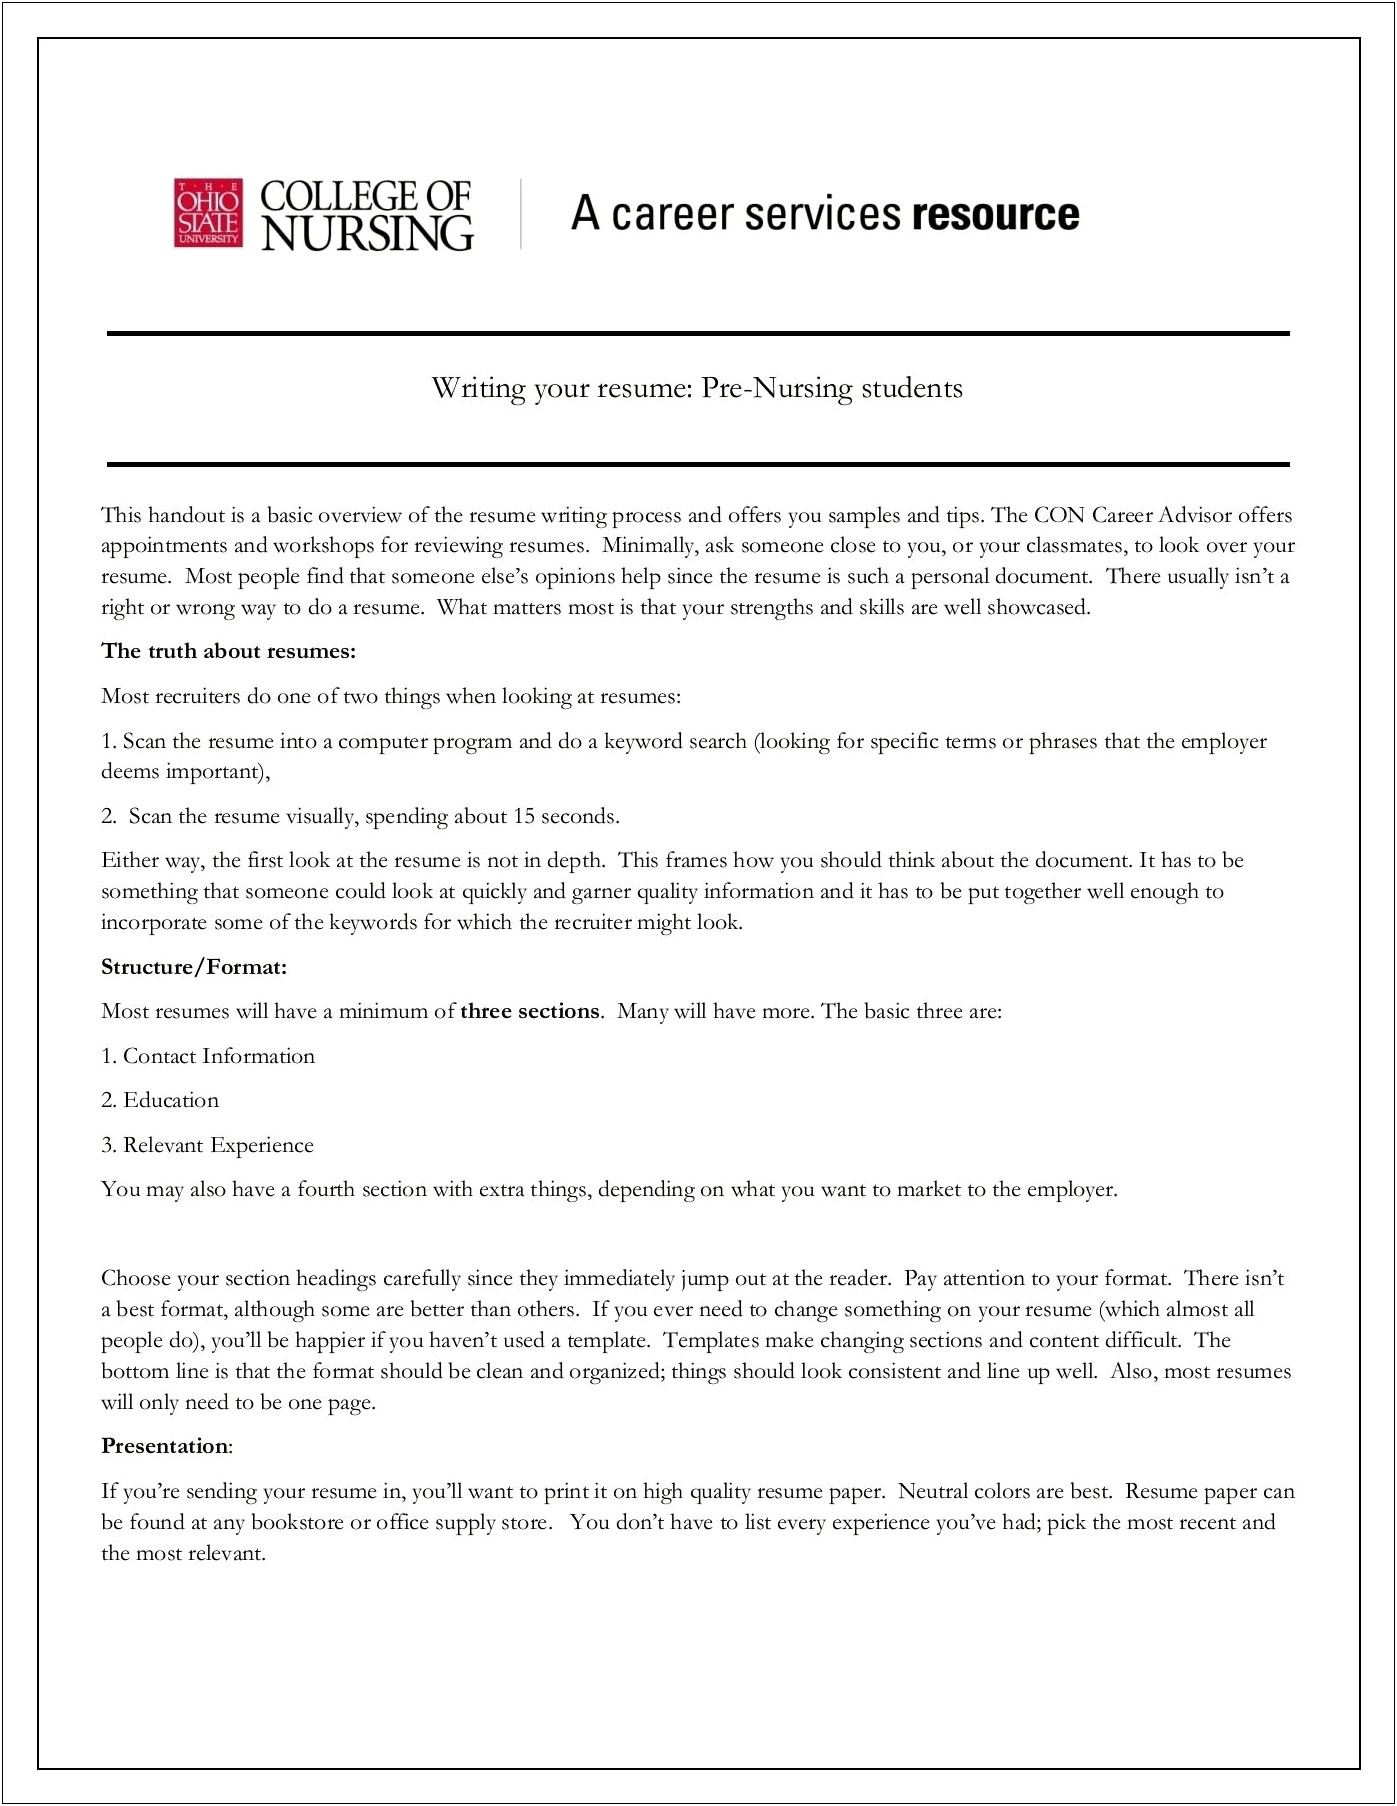 Important Nursing Student Skills To Highlight On Resume